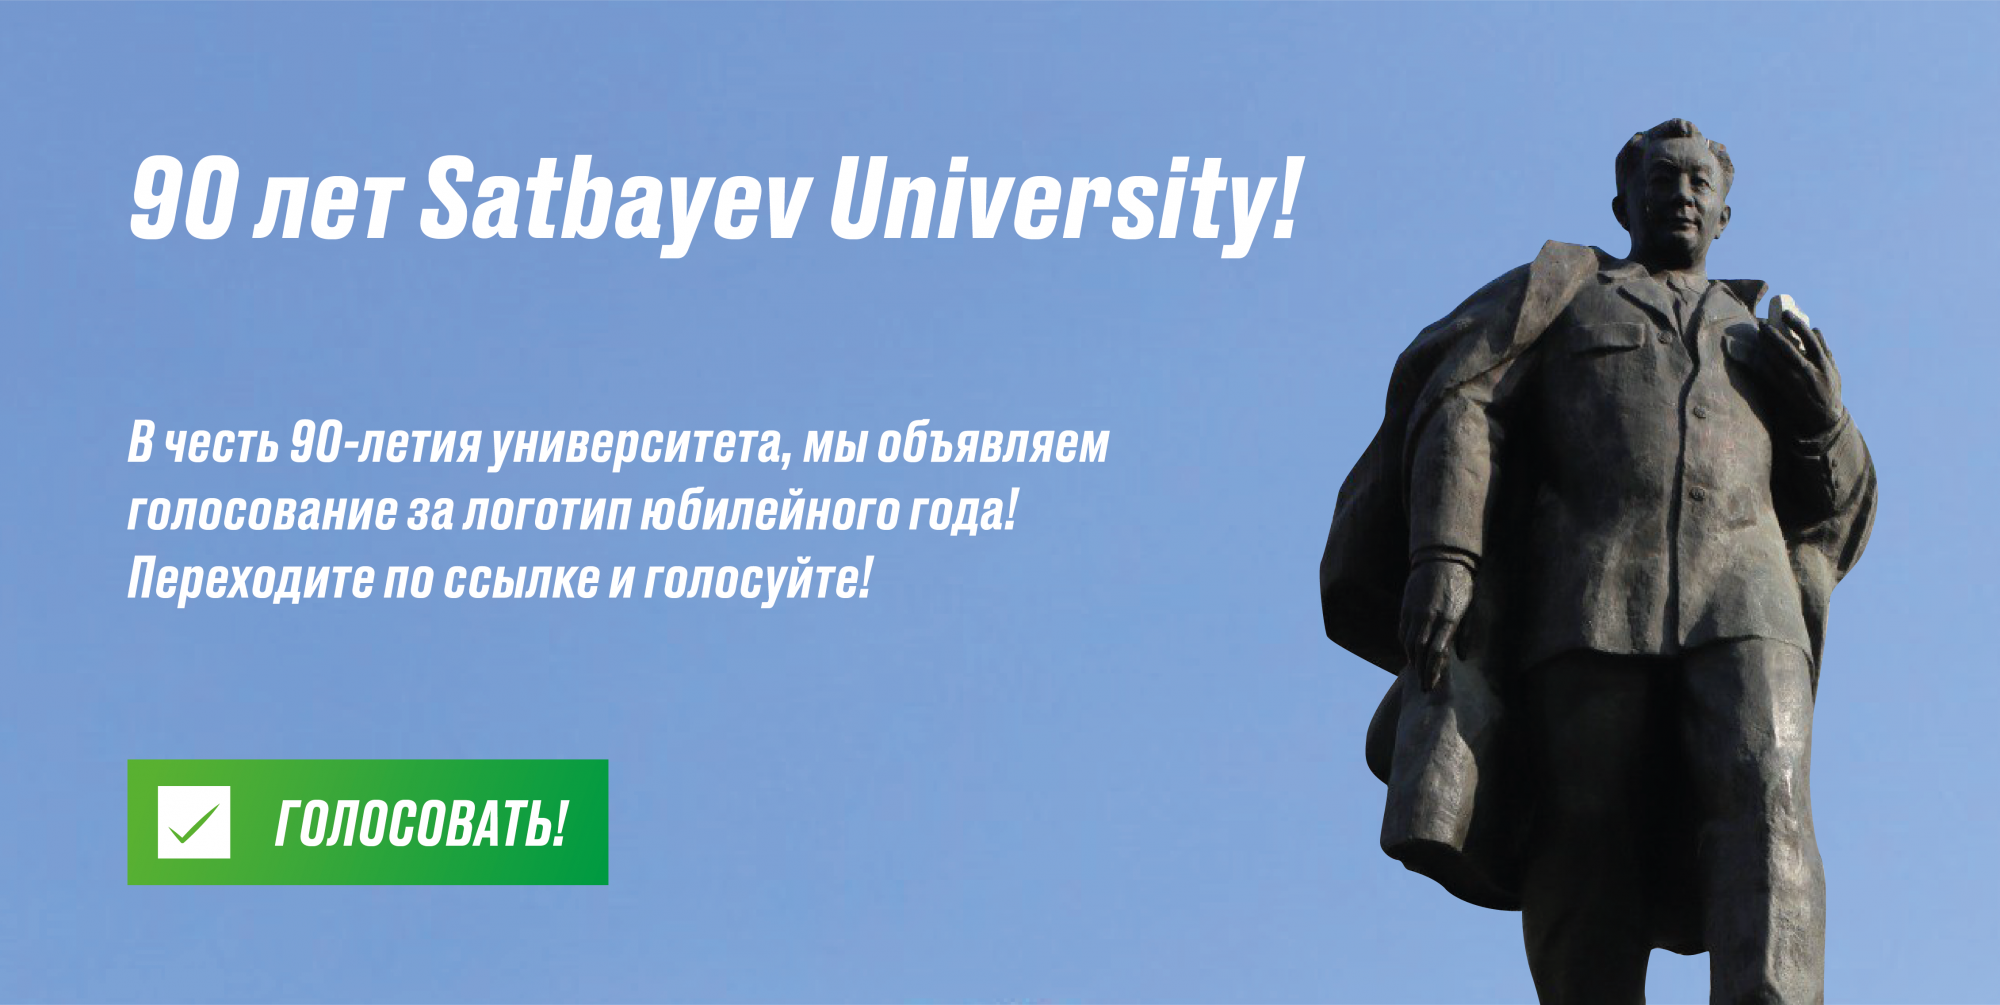 Satbayev University 